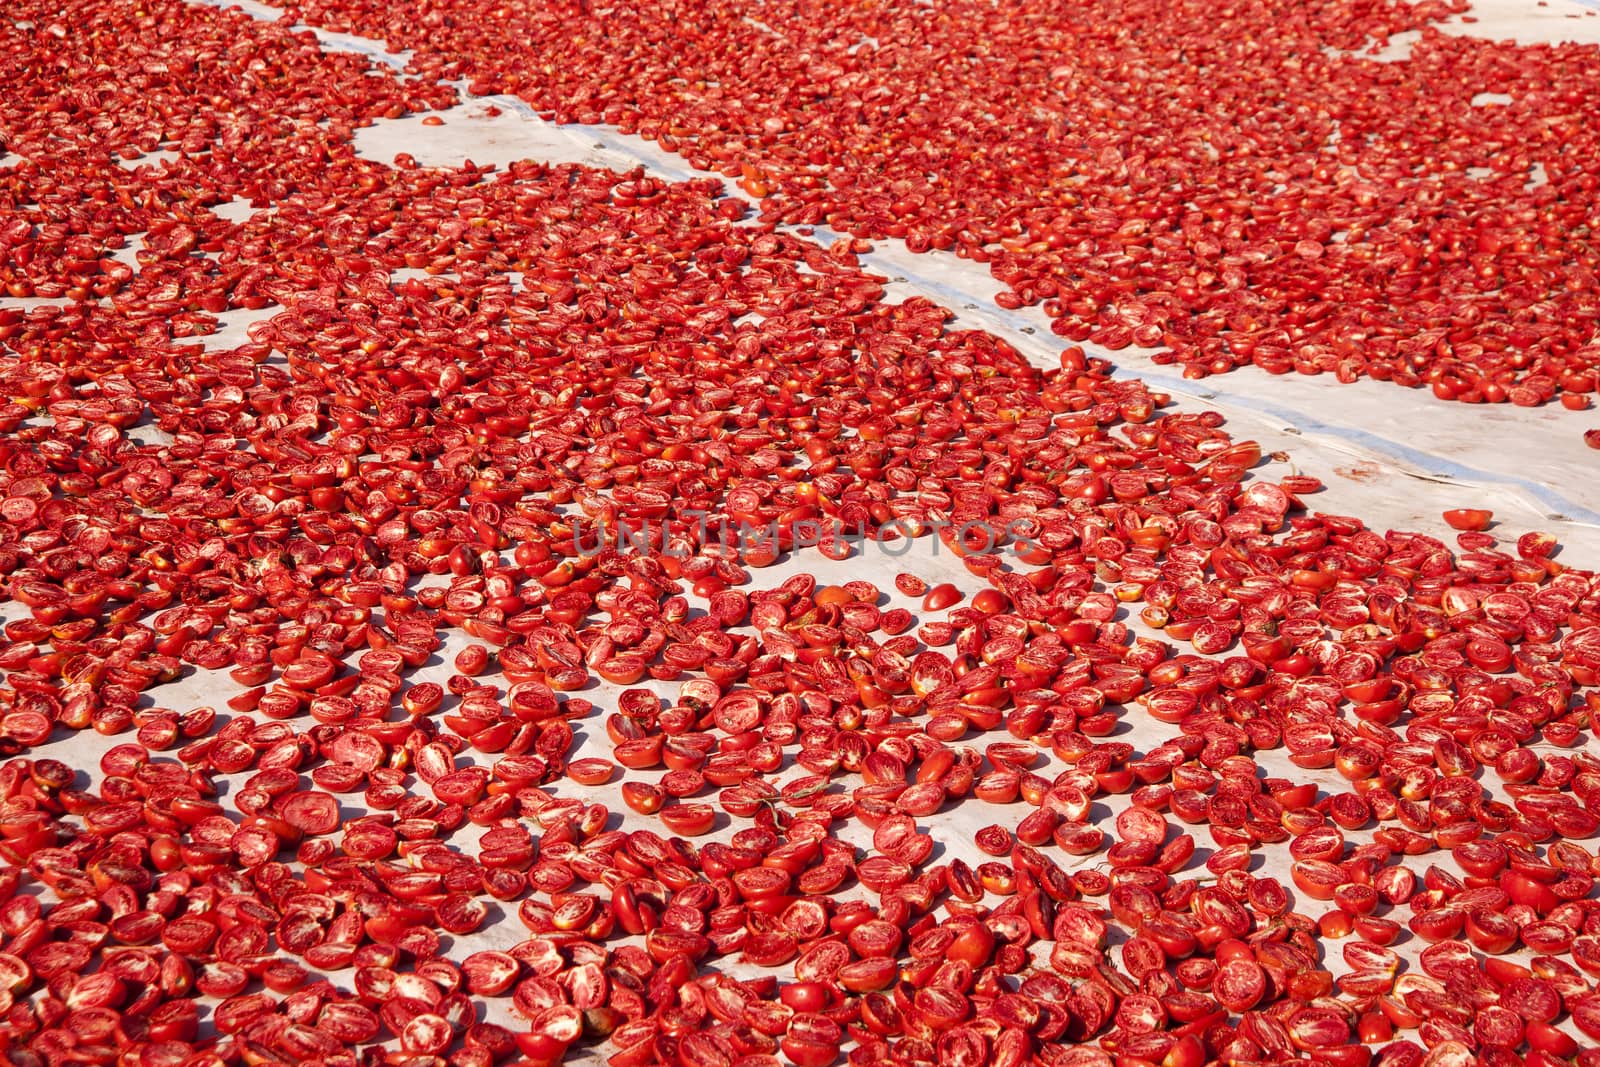 dried tomatoes  by emirkoo